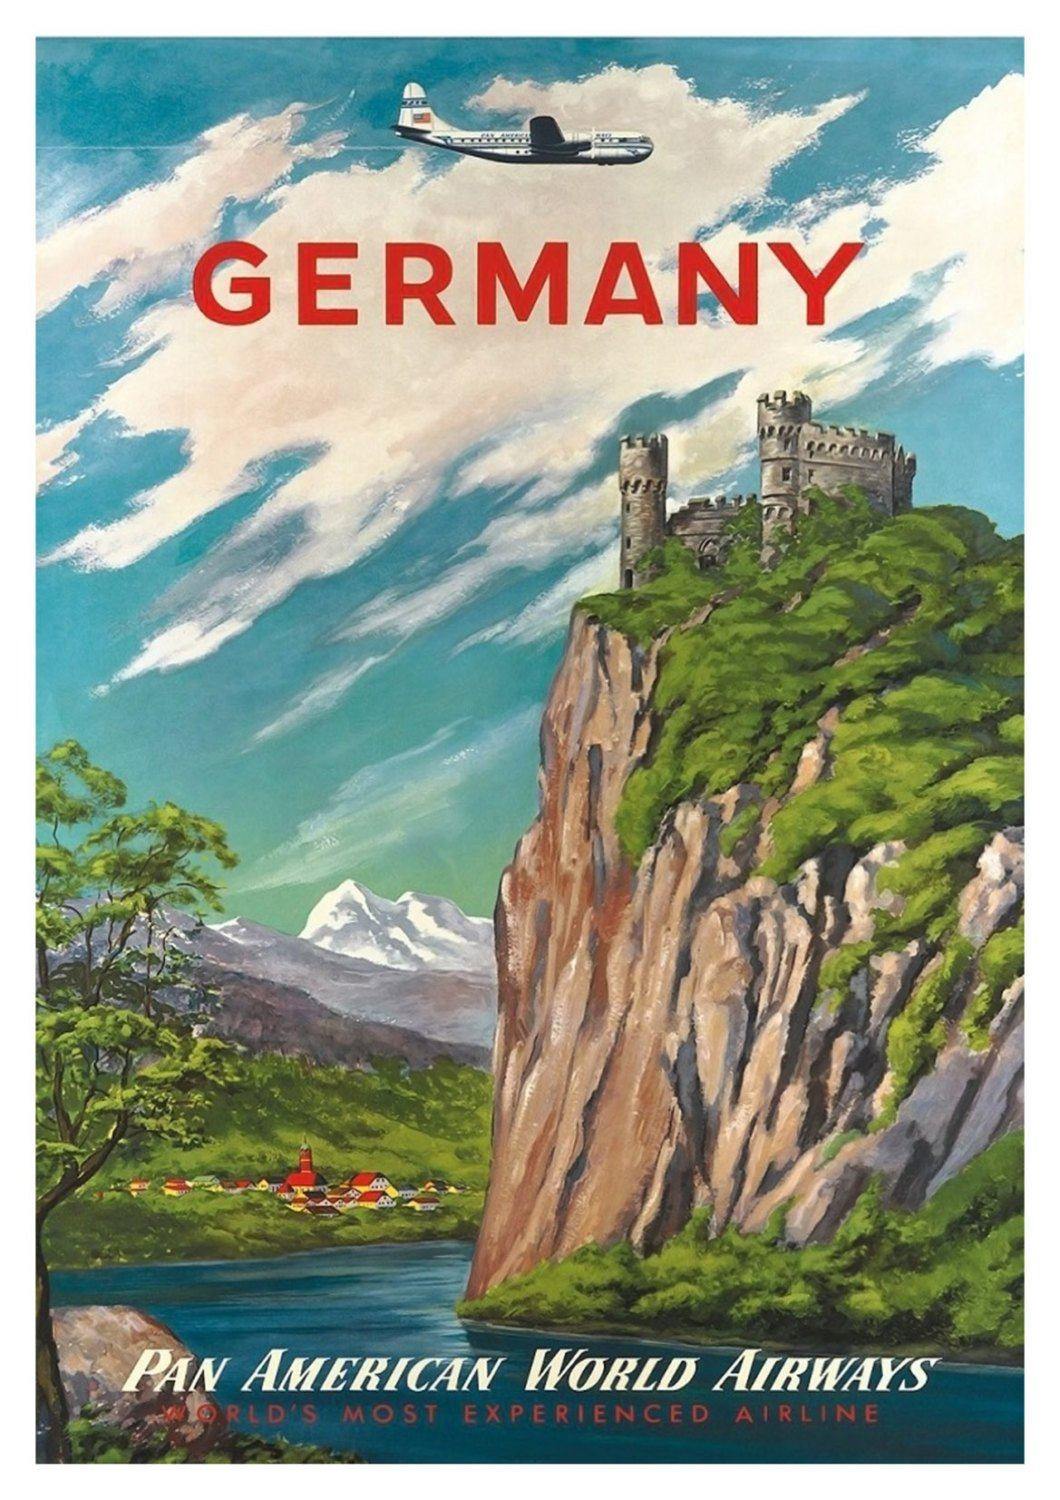 GERMANY TRAVEL POSTER: Vintage German Airline Tourism Advert - Pimlico Prints